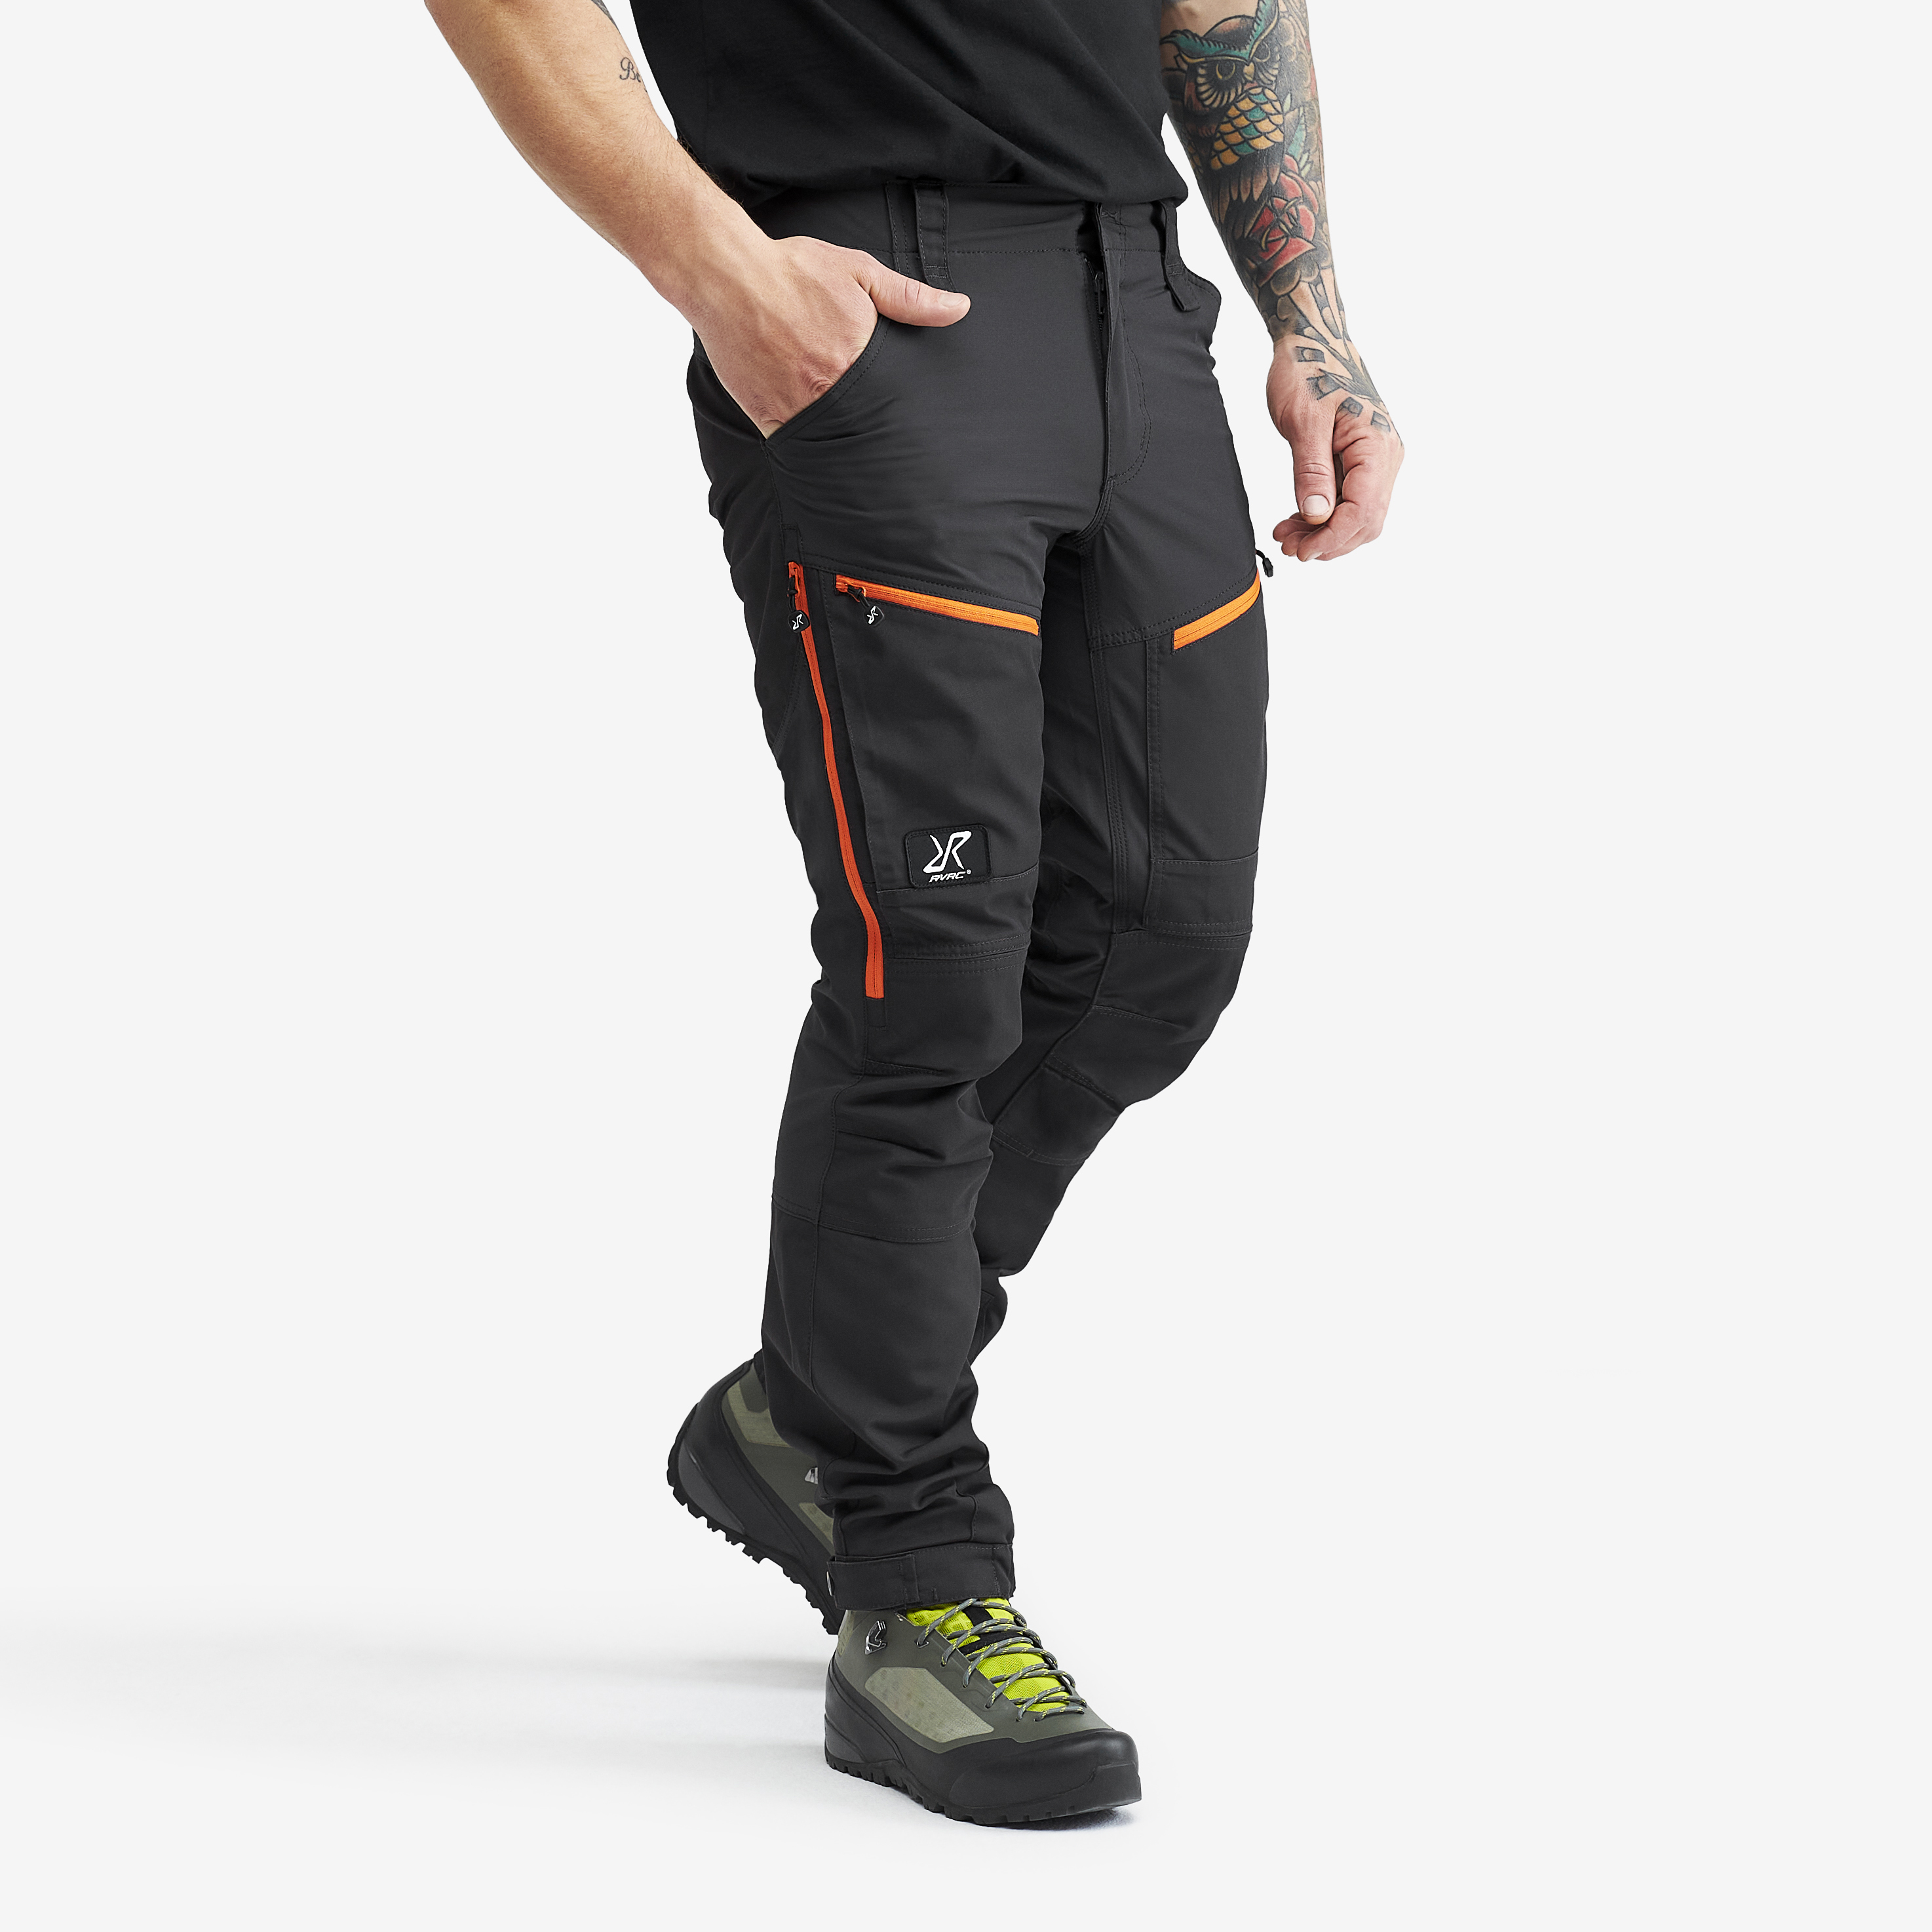 RVRC GP Pro Short Pants Grey/Orange Homme